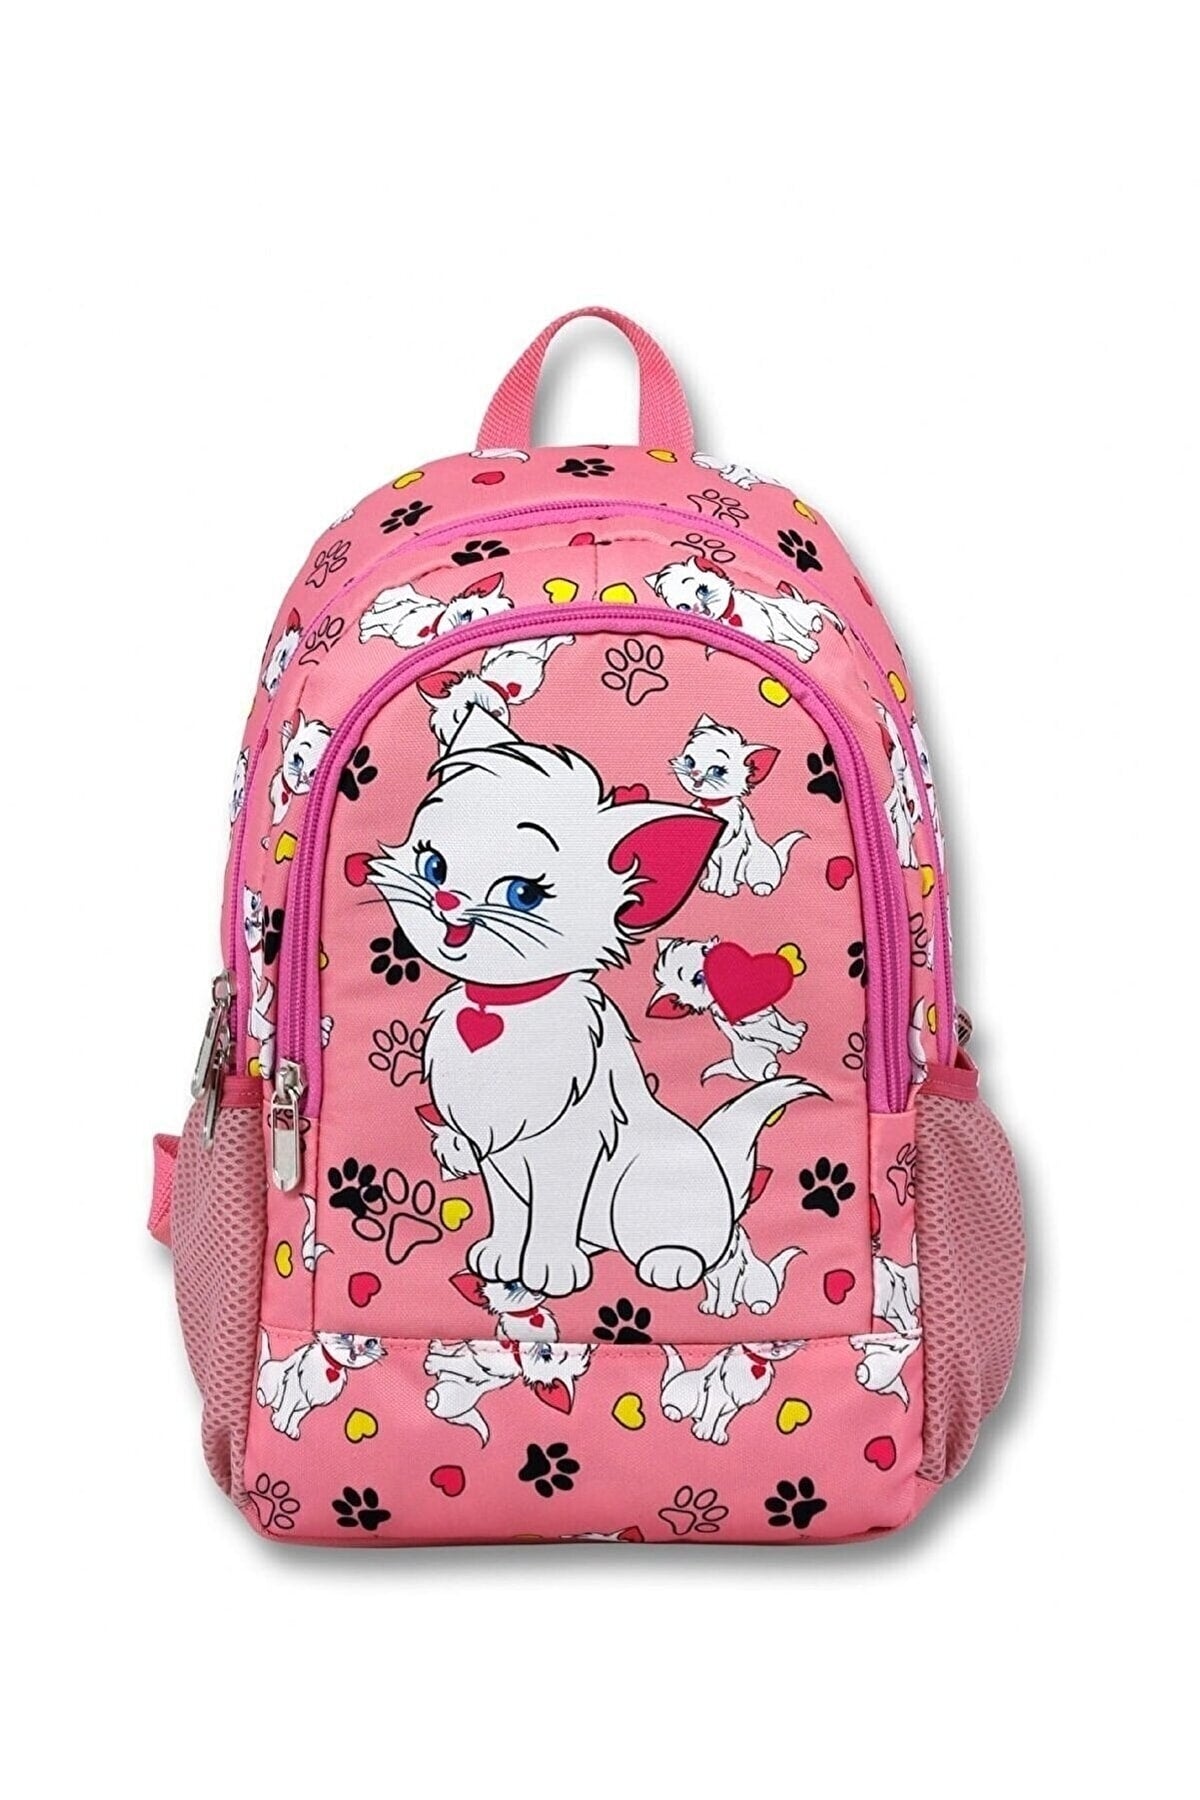 -Hope Bag-Kindergarten Cute Cat Printed School Bag And Lunch Box Set